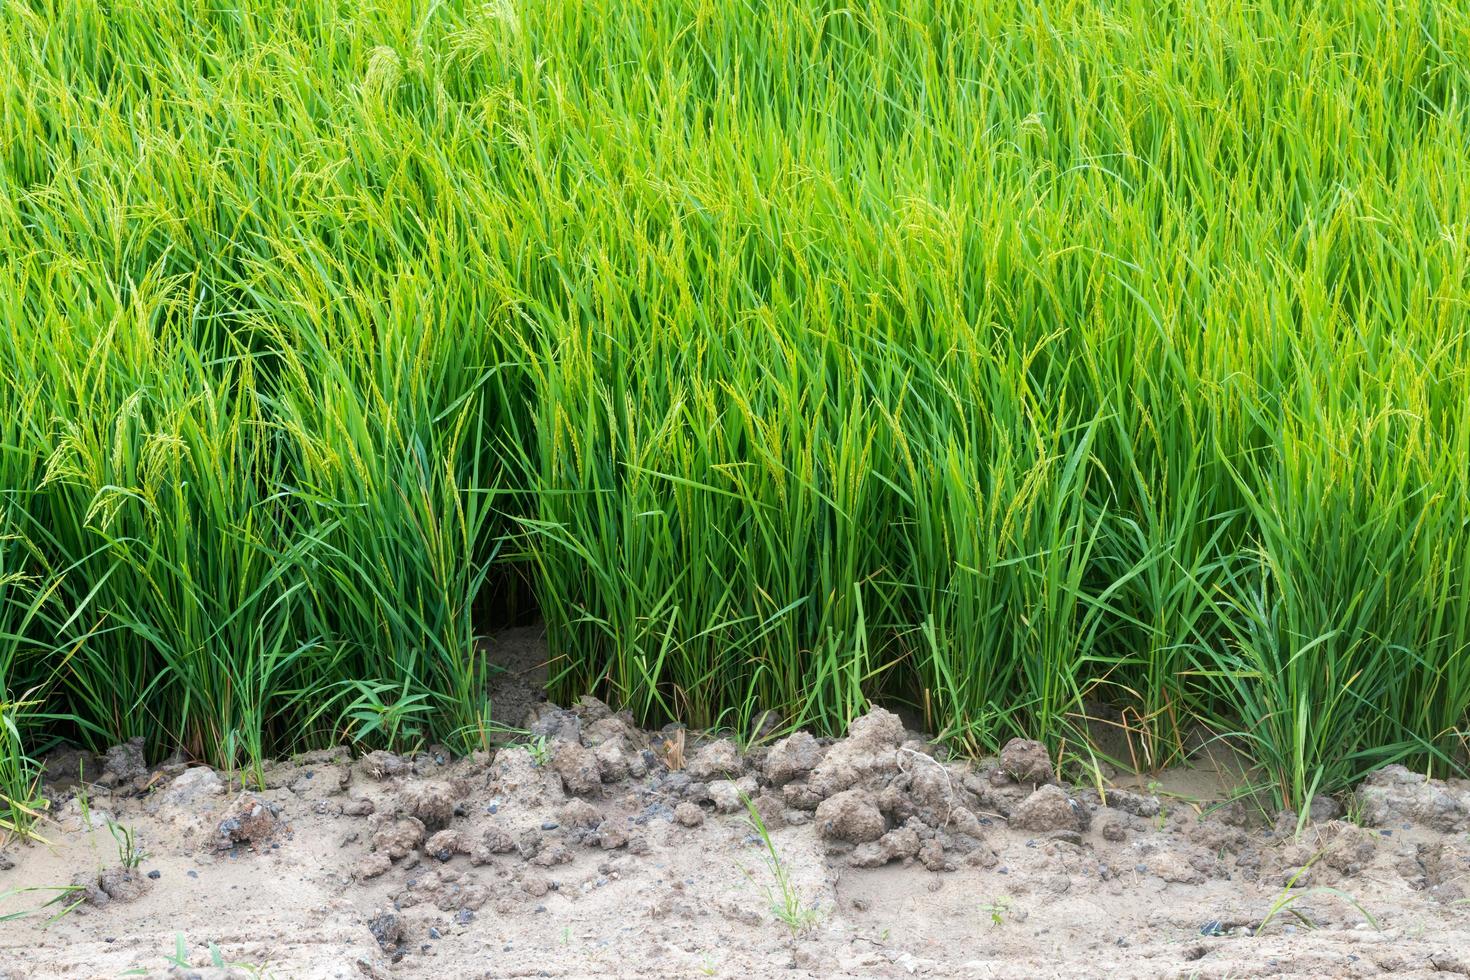 arrozal em solo colhido. foto